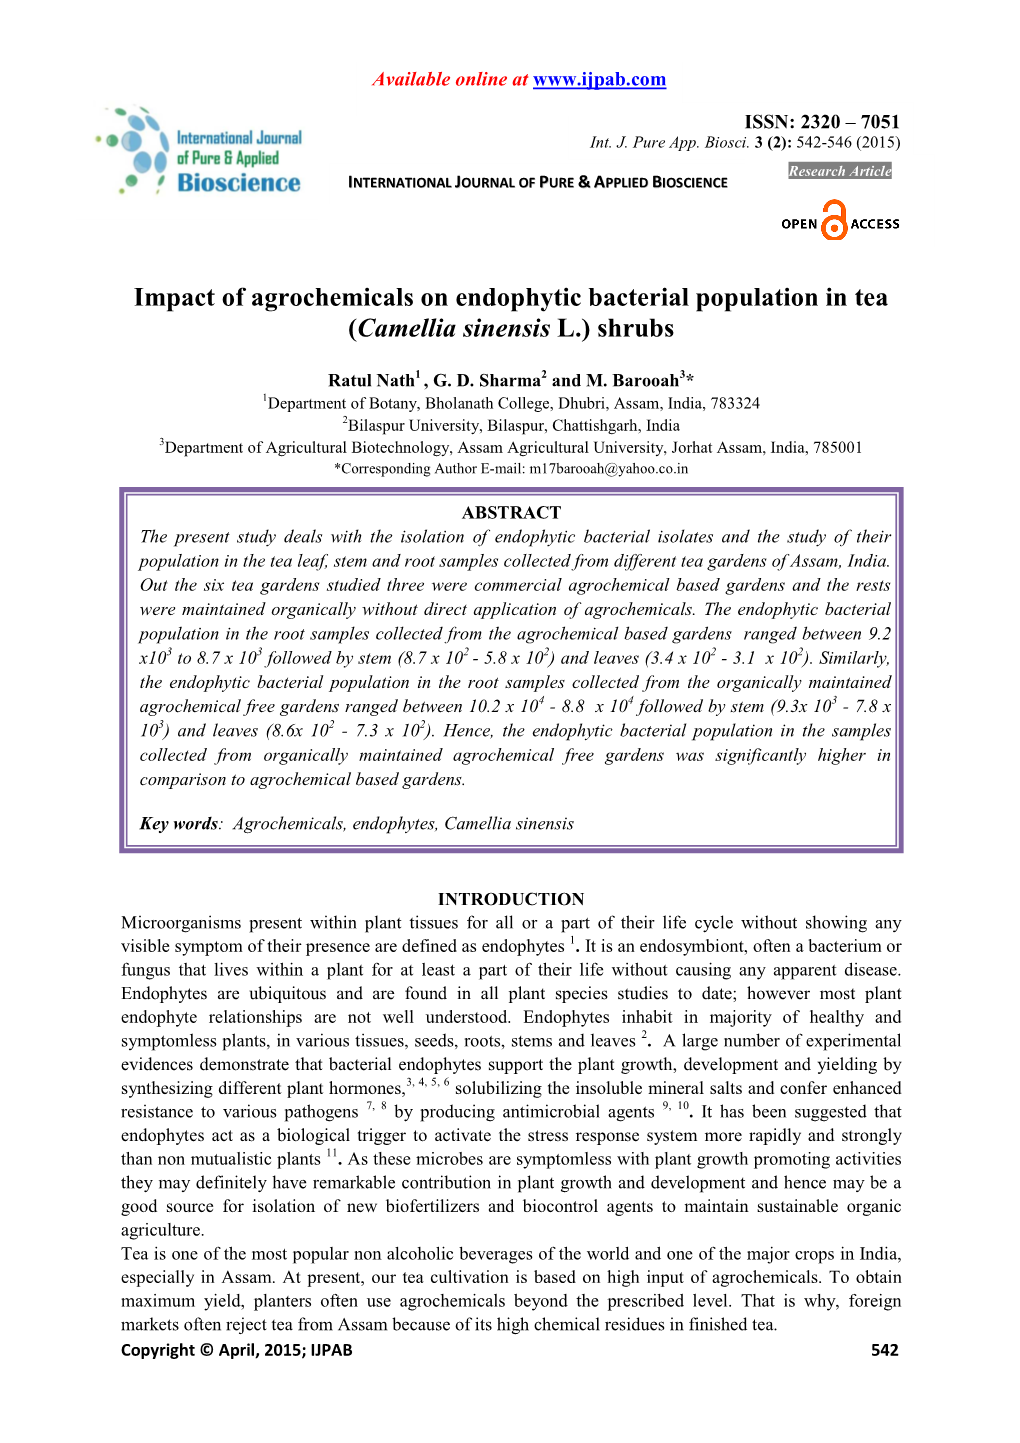 Impact of Agrochemicals on Endophytic Bacterial Population in Tea (Camellia Sinensis L.) Shrubs